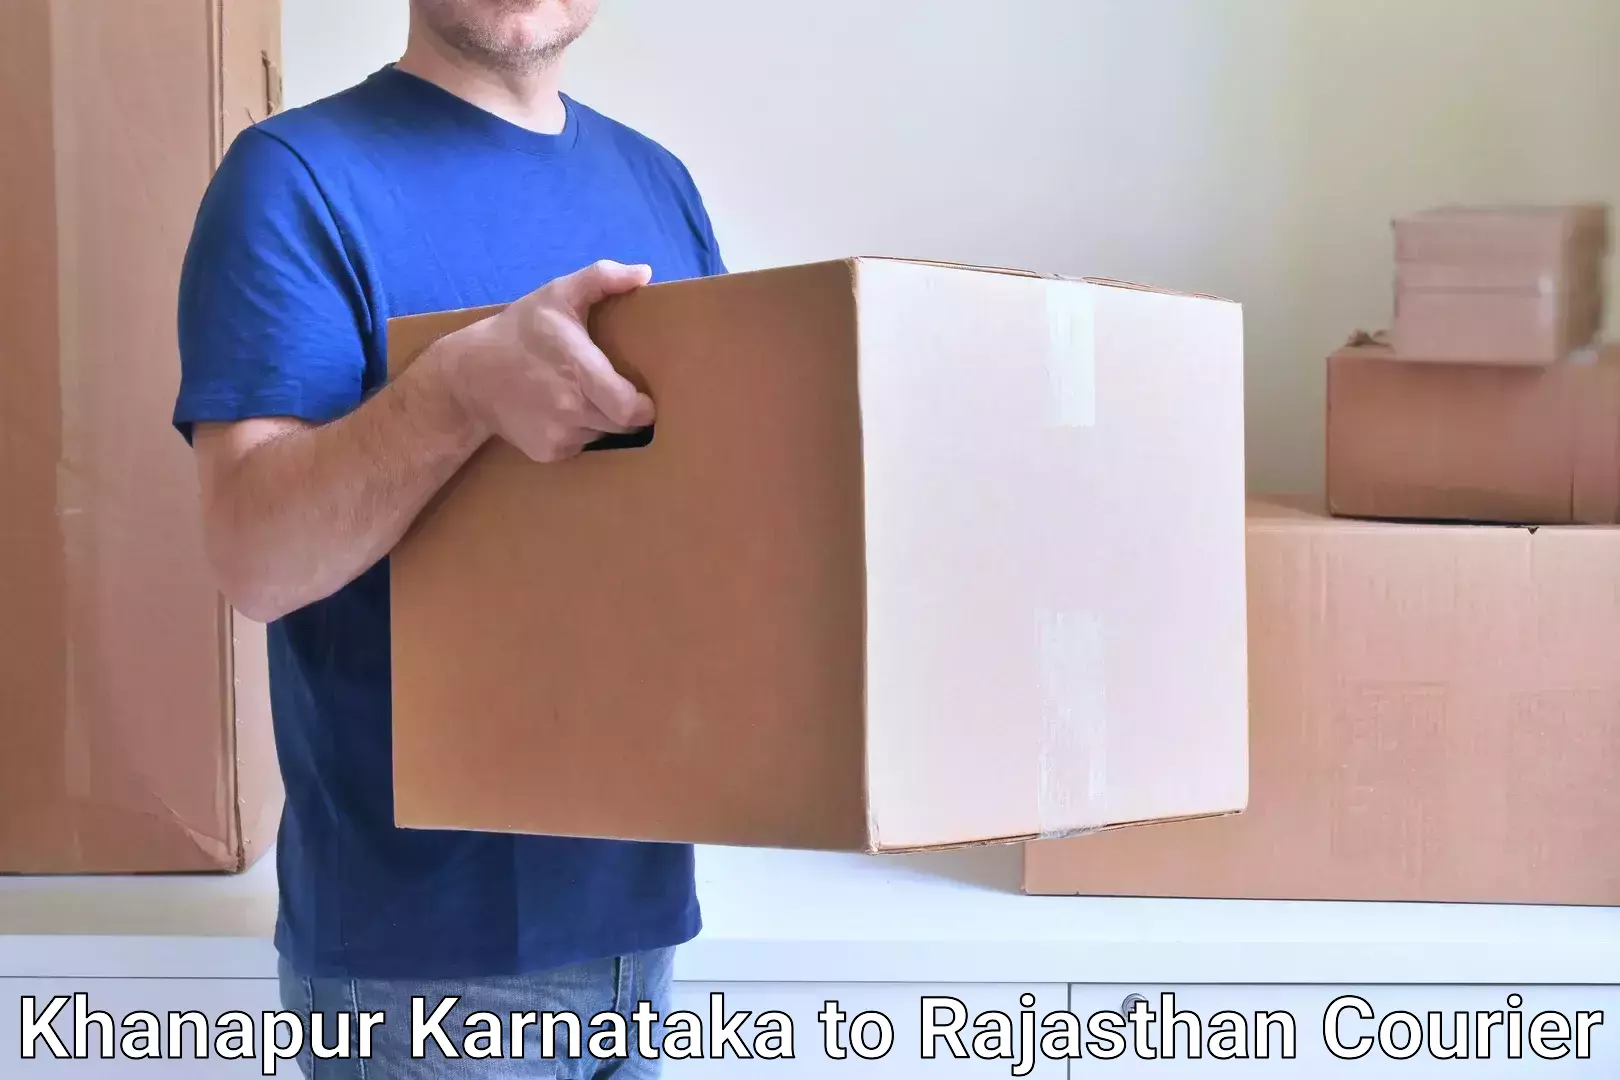 Small parcel delivery Khanapur Karnataka to Sri Ganganagar